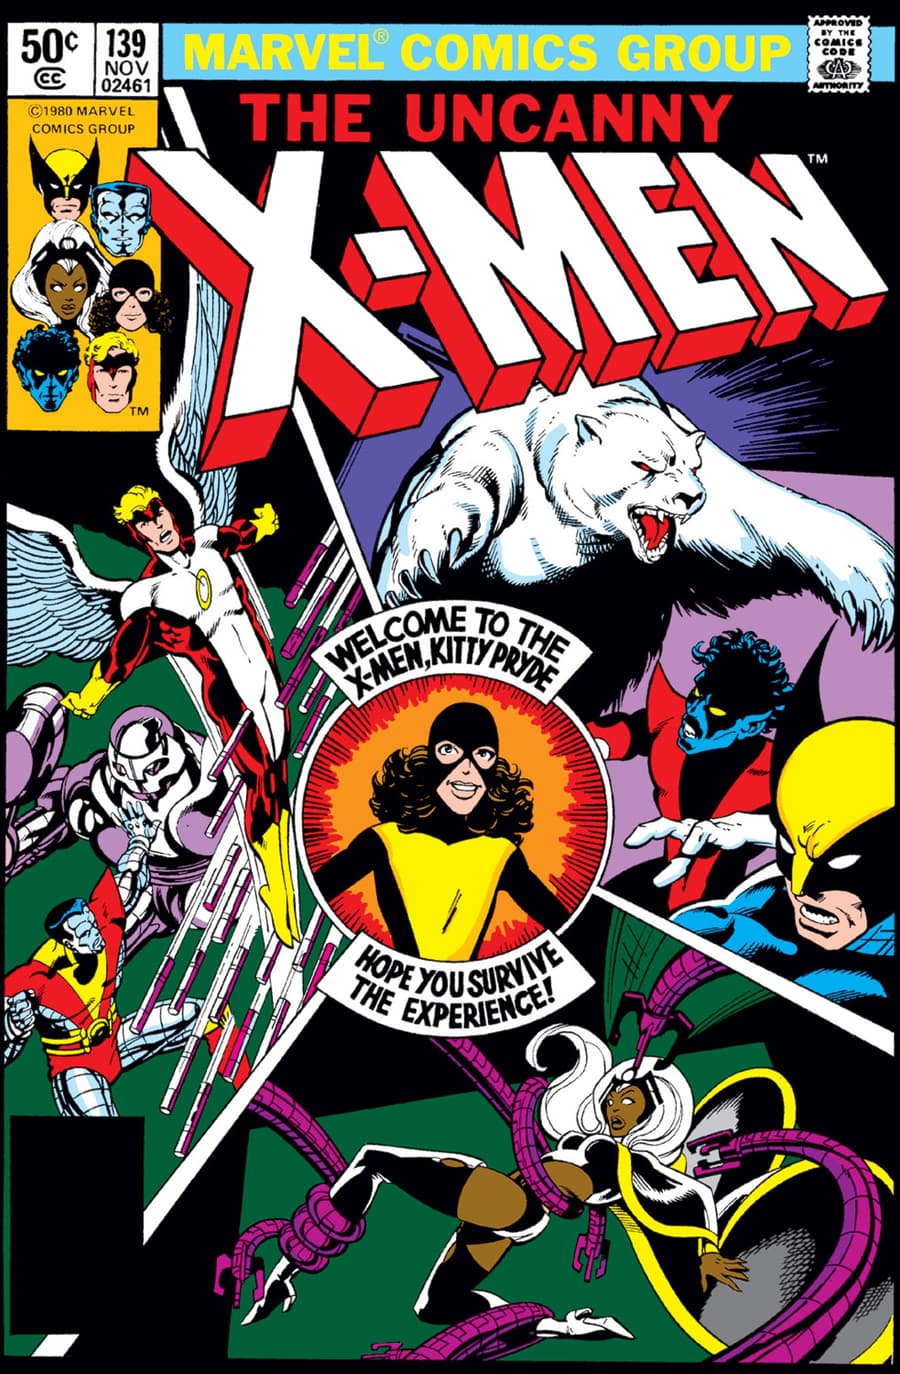 UNCANNY X-MEN (1963) #139 cover by John Byrne